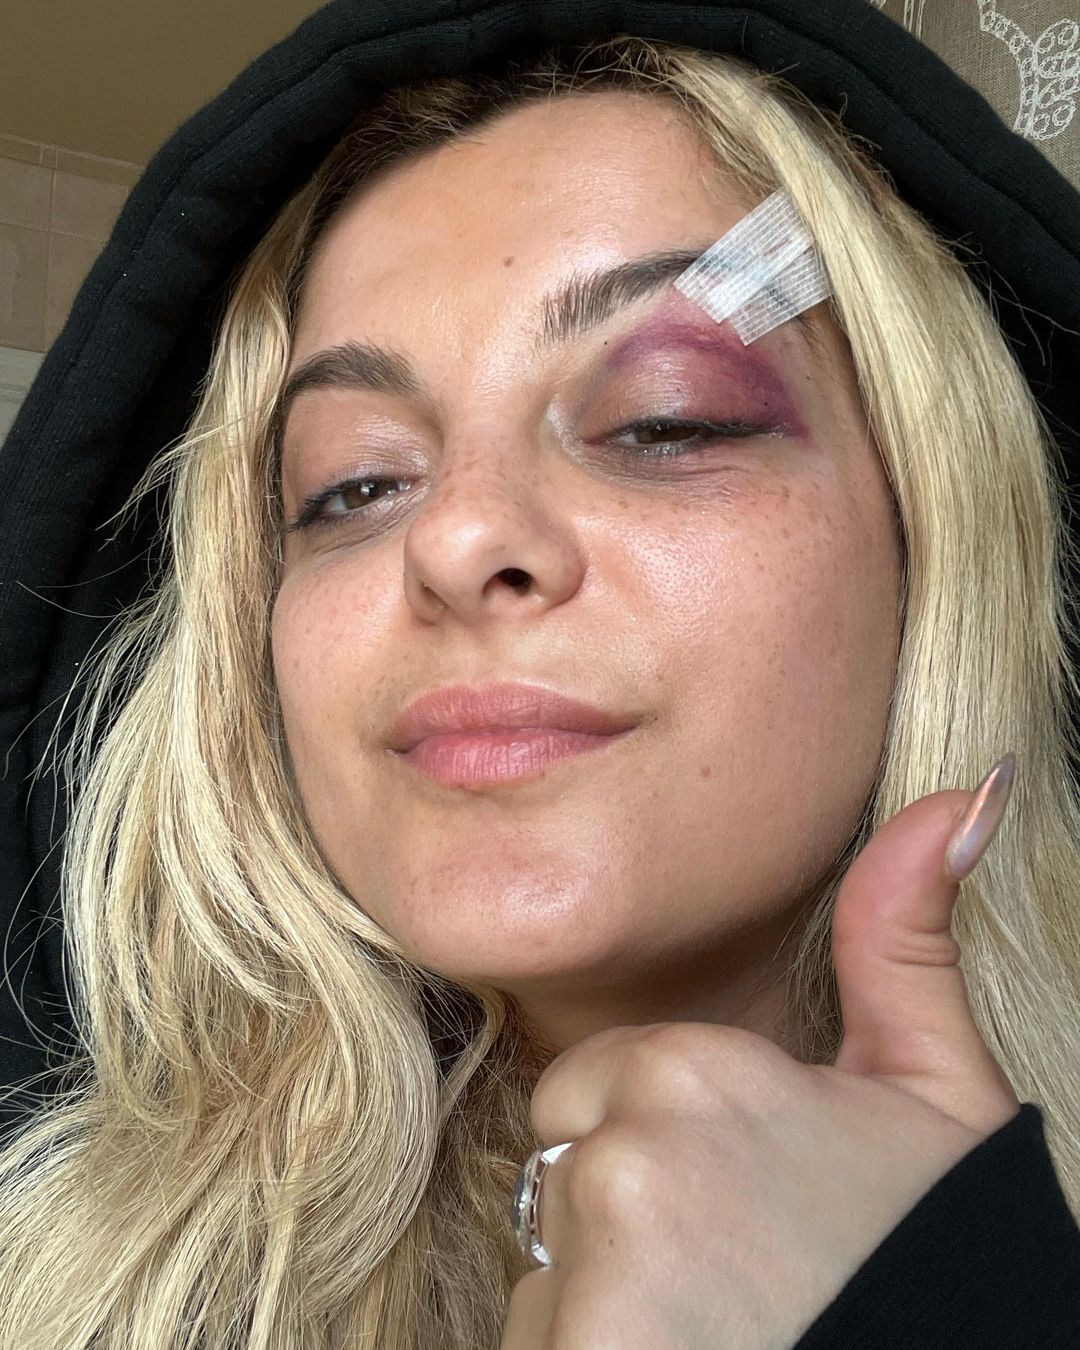 A Better Look at Bebe Rexha’s Black Eye!